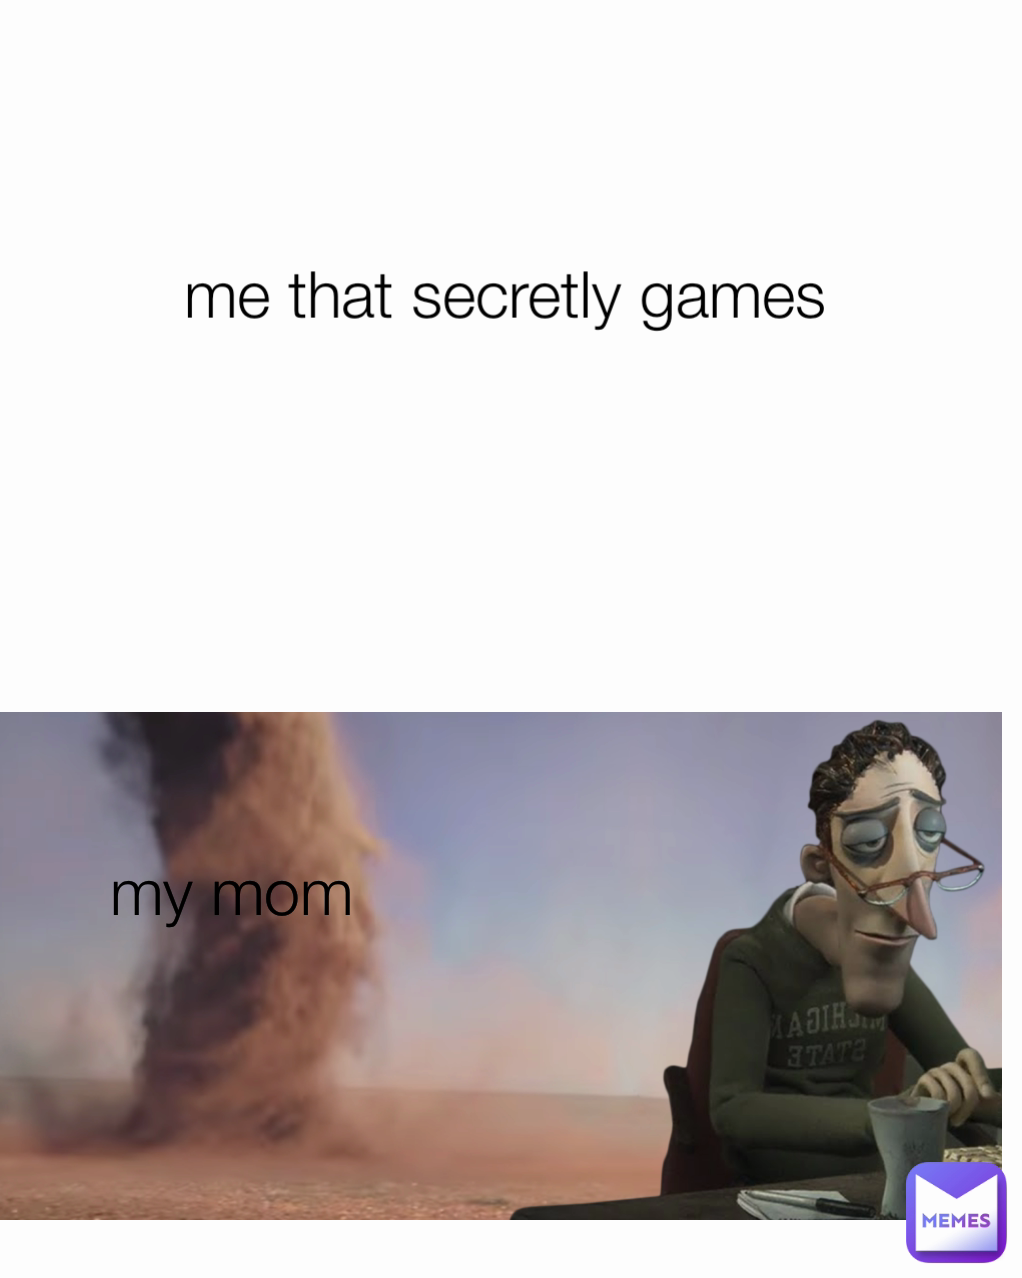 my mom me that secretly games